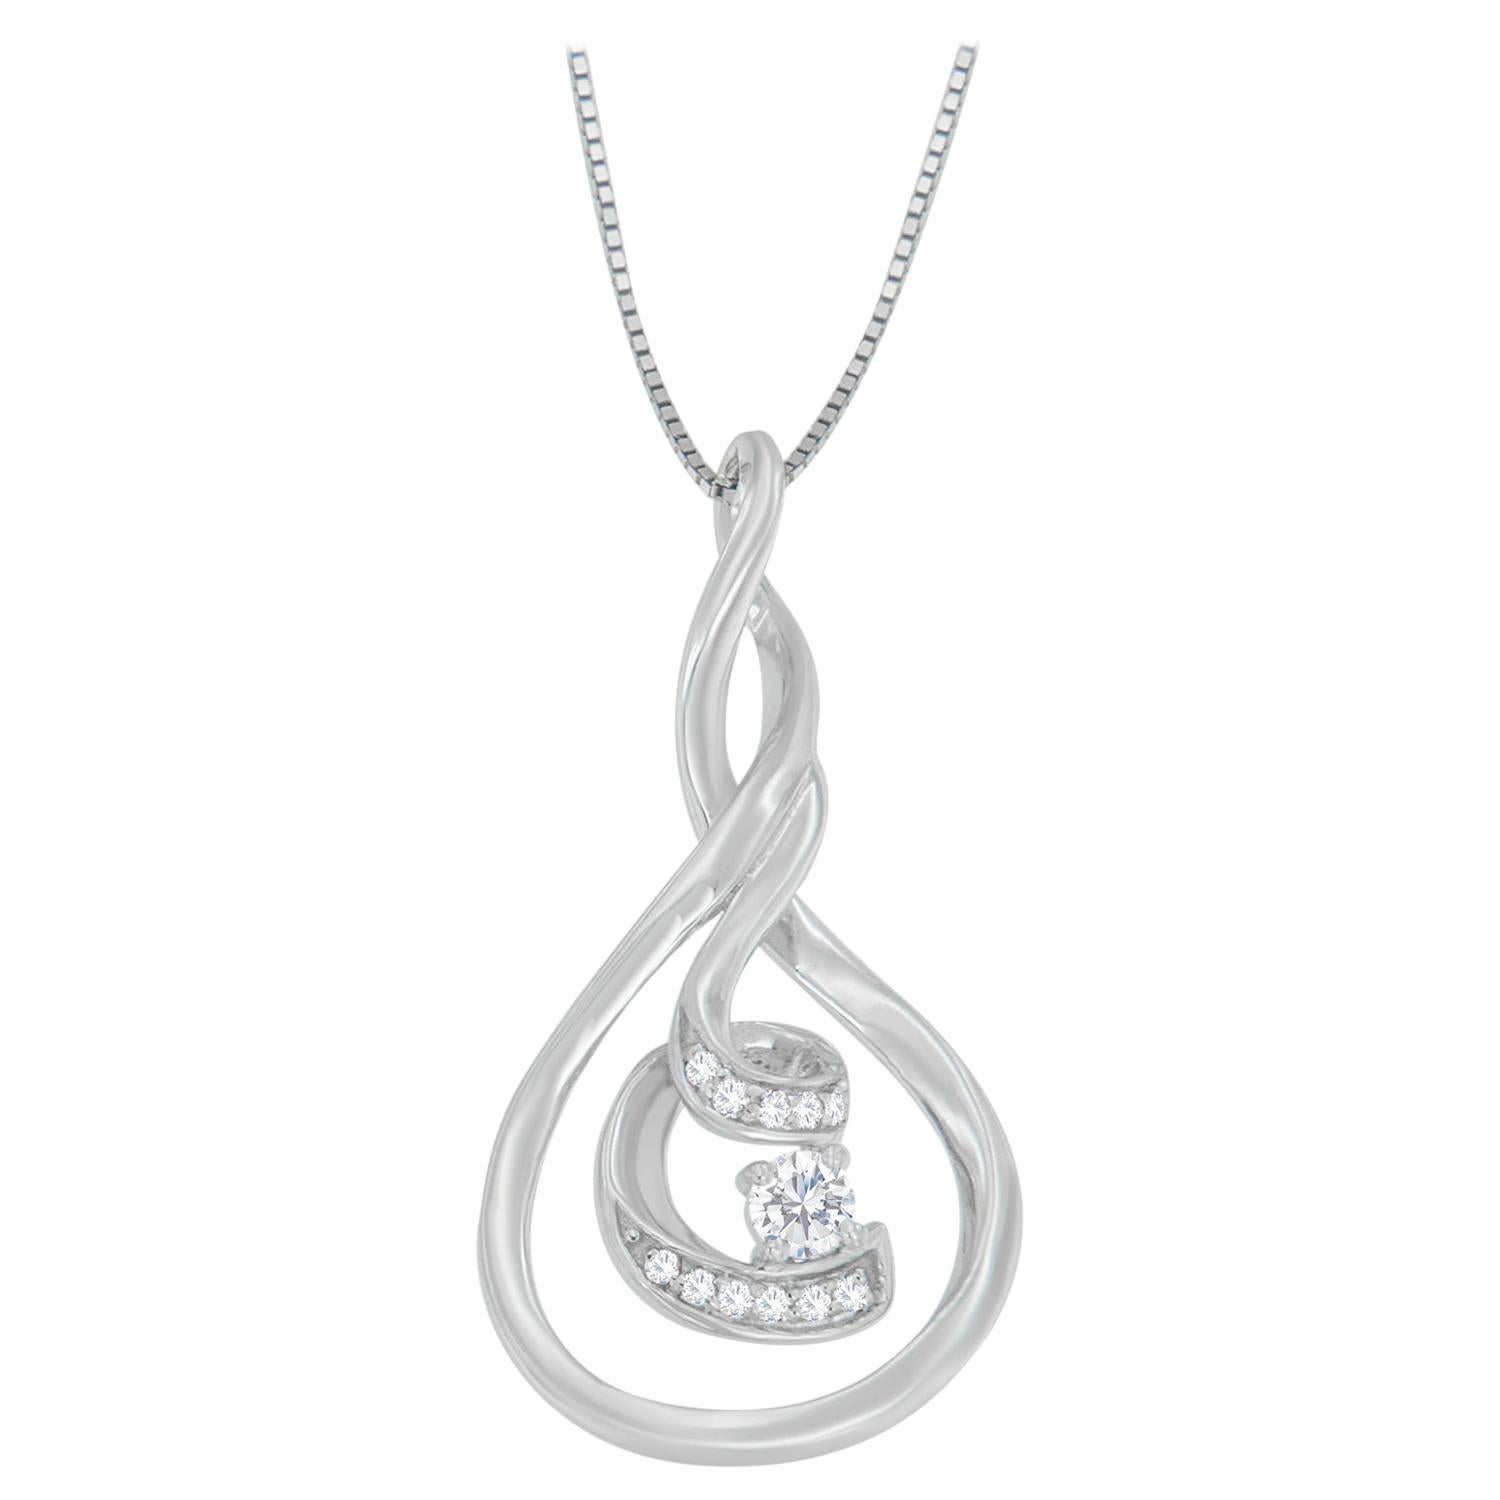 10K White Gold 1/8 Carat Round Cut Diamond Layered Spiral Pendant Necklace